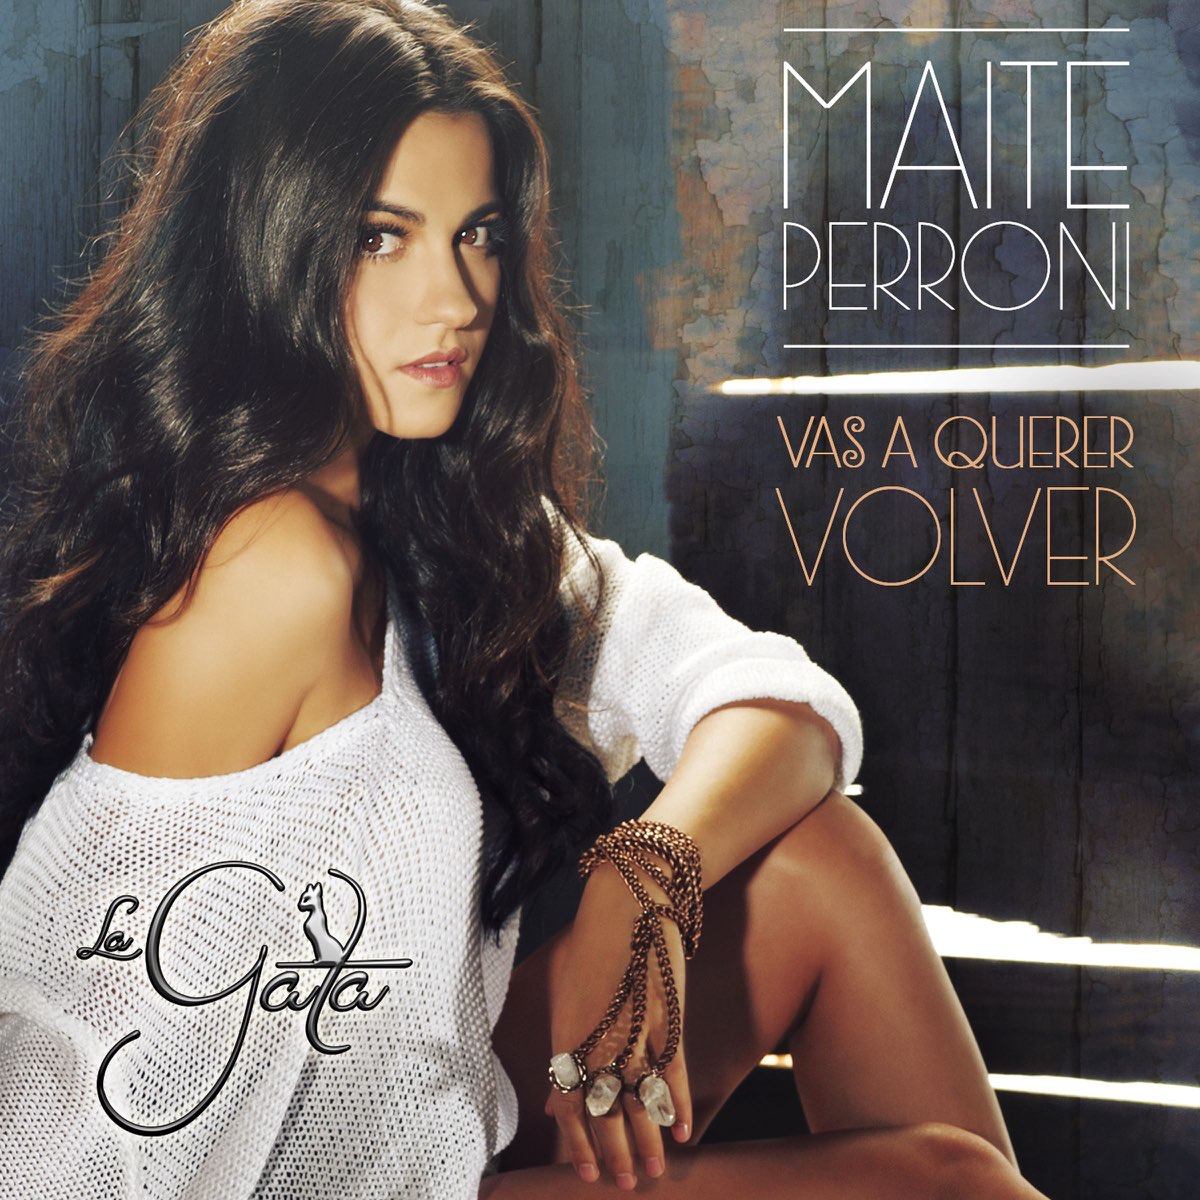 Vas a querer volver - Single by Maite Perroni on Apple Music